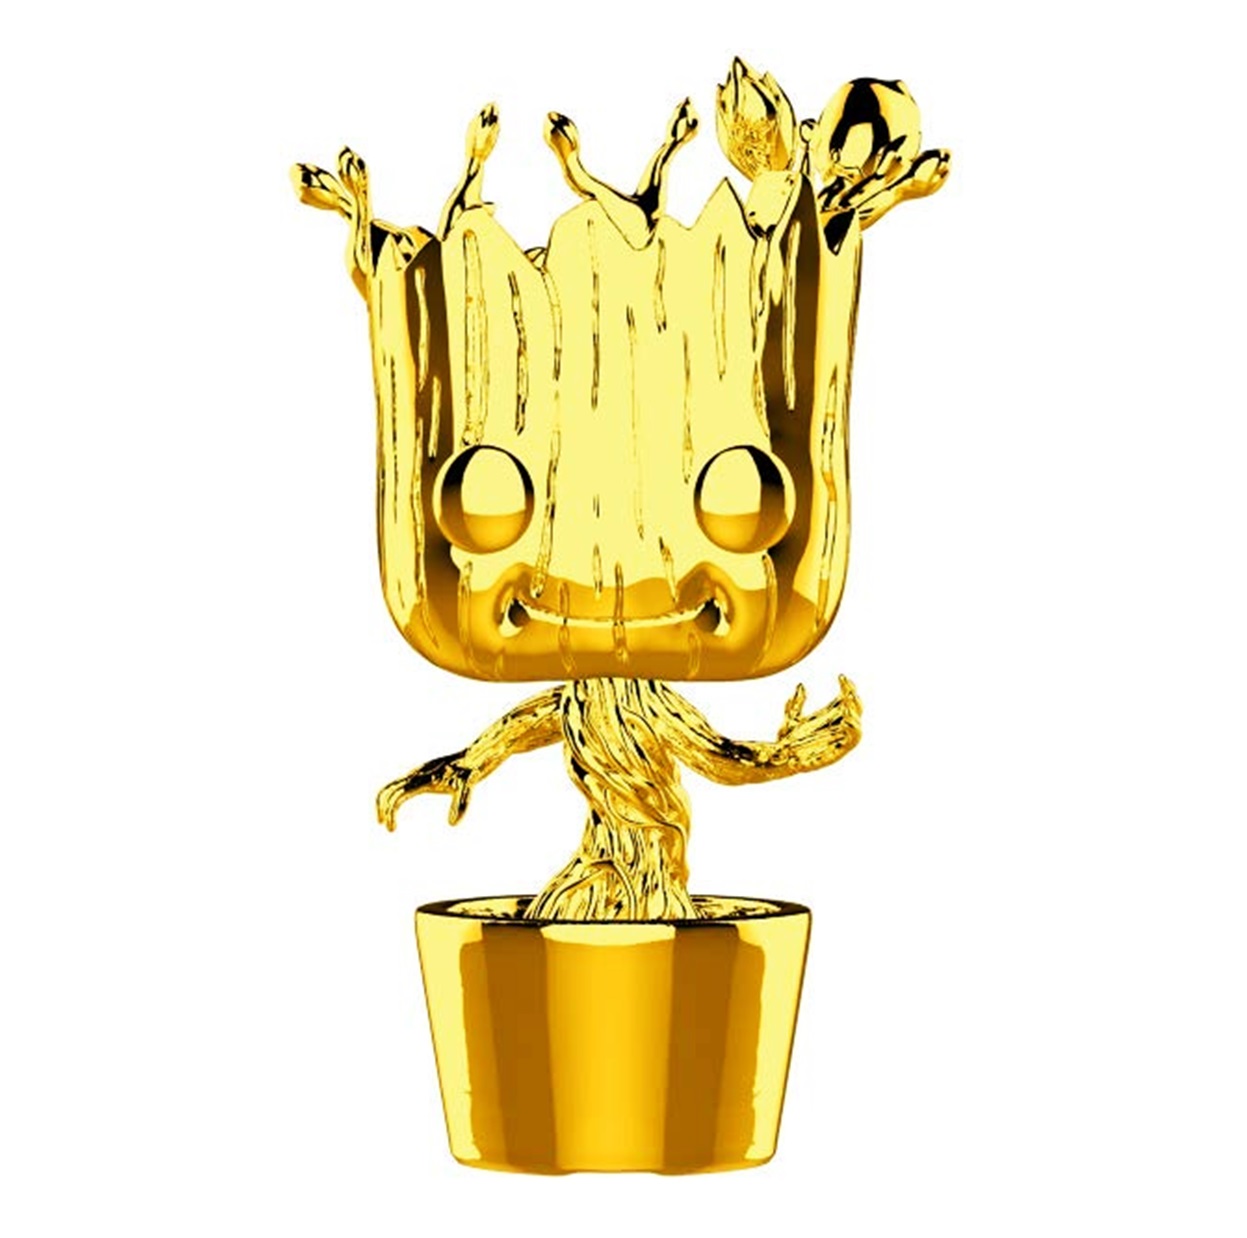 Groot Baby #378 Gold Chrome Funko Pop! Marvel Studio's 10th